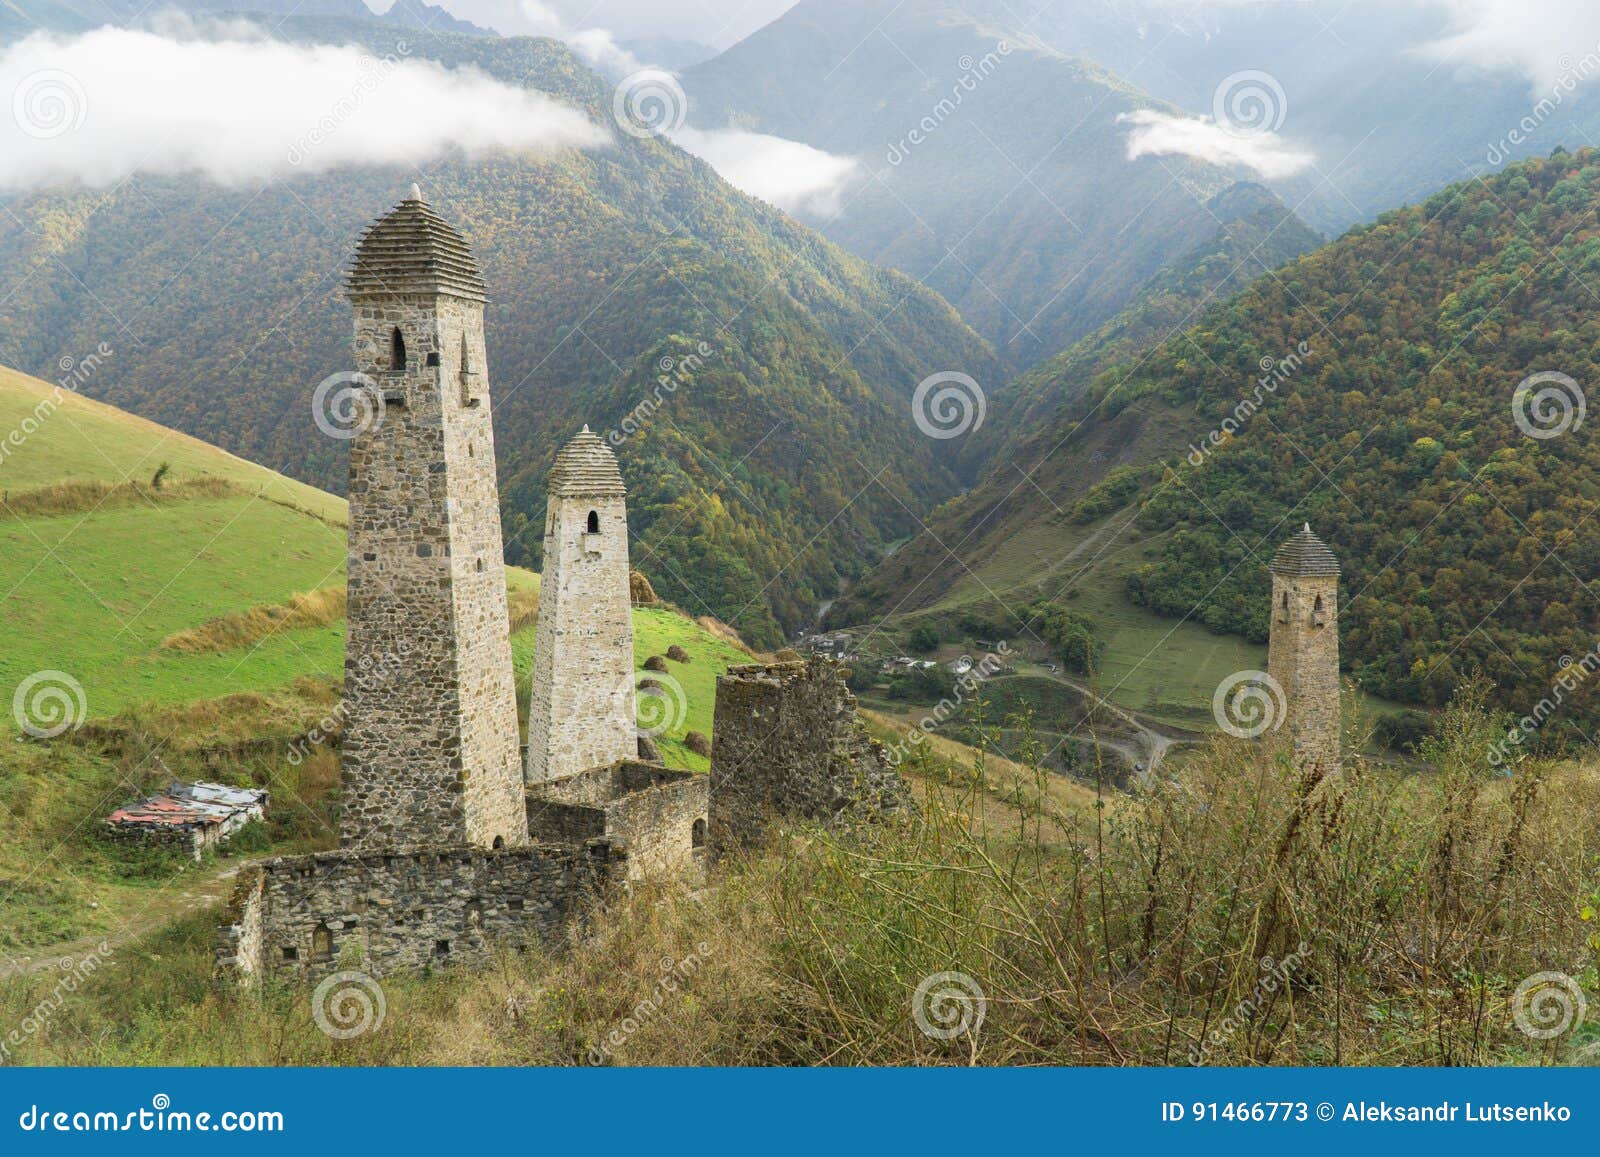 battle towers erzi in the jeyrah gorge, republic of ingushetia